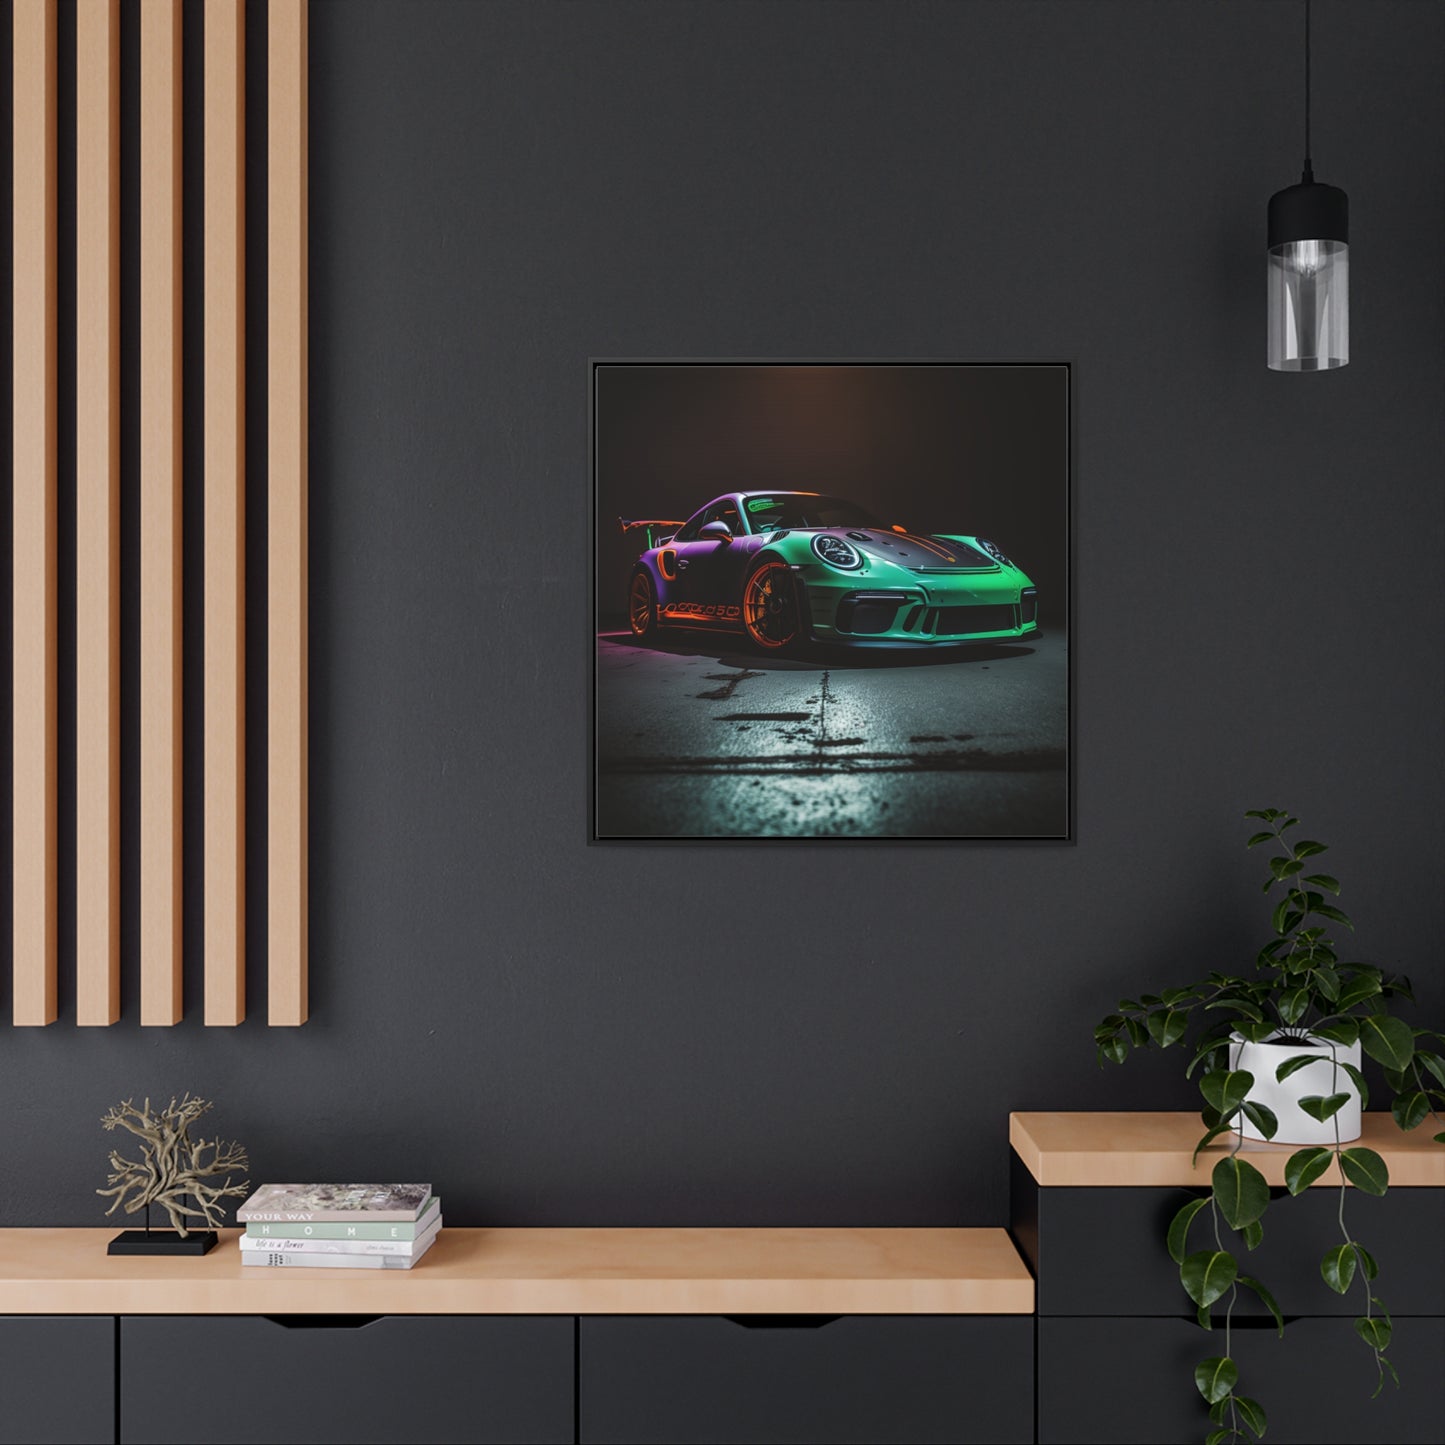 Gallery Canvas Wraps, Square Frame Porsche Color 4